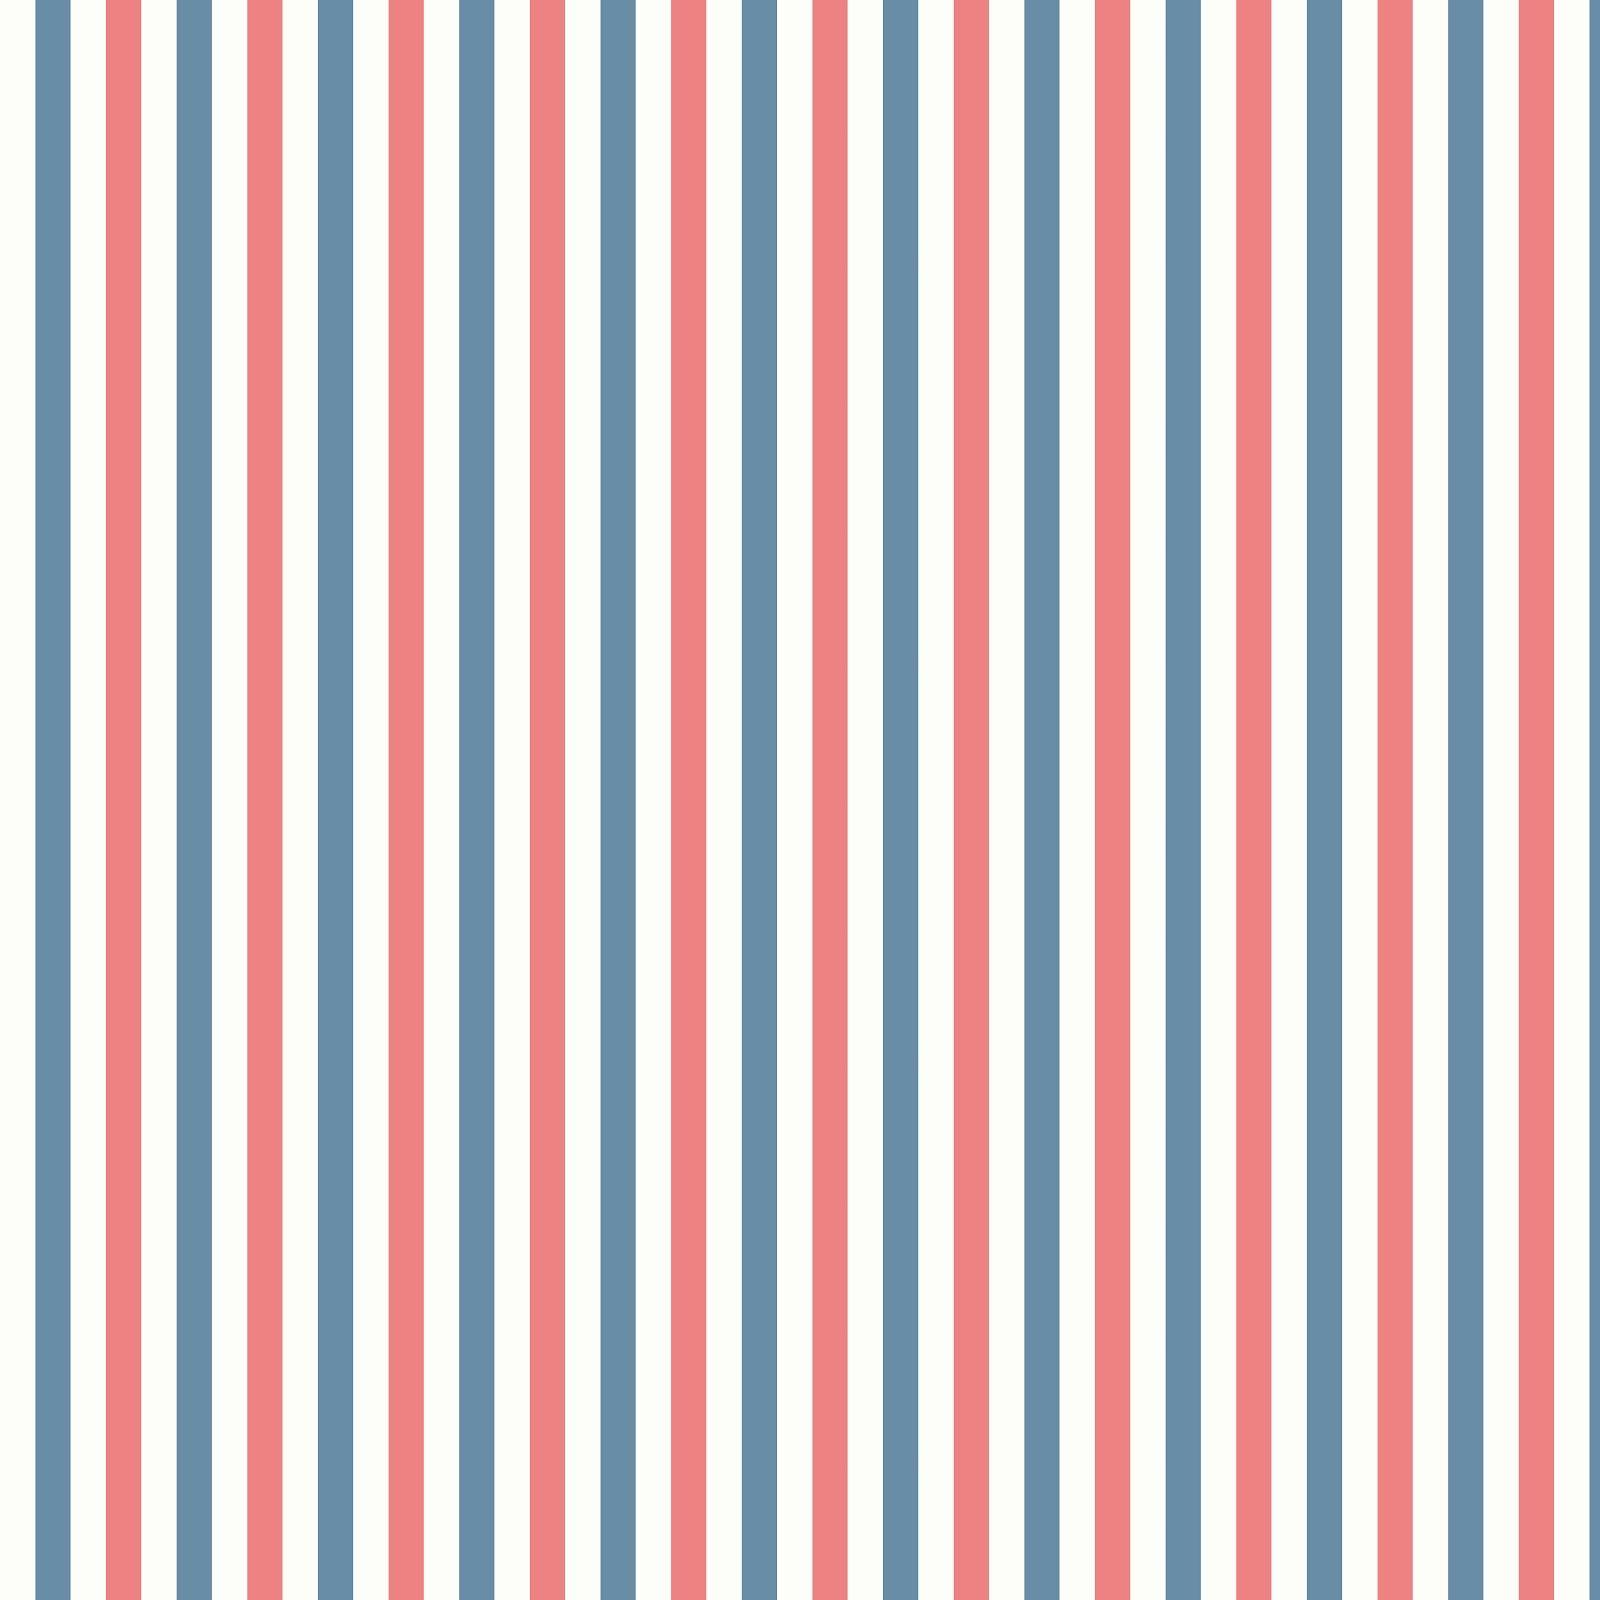 Striped White and Blue Background Logo - FREE ViNTaGE DiGiTaL STaMPS**: Free Digital Scrapbook Paper